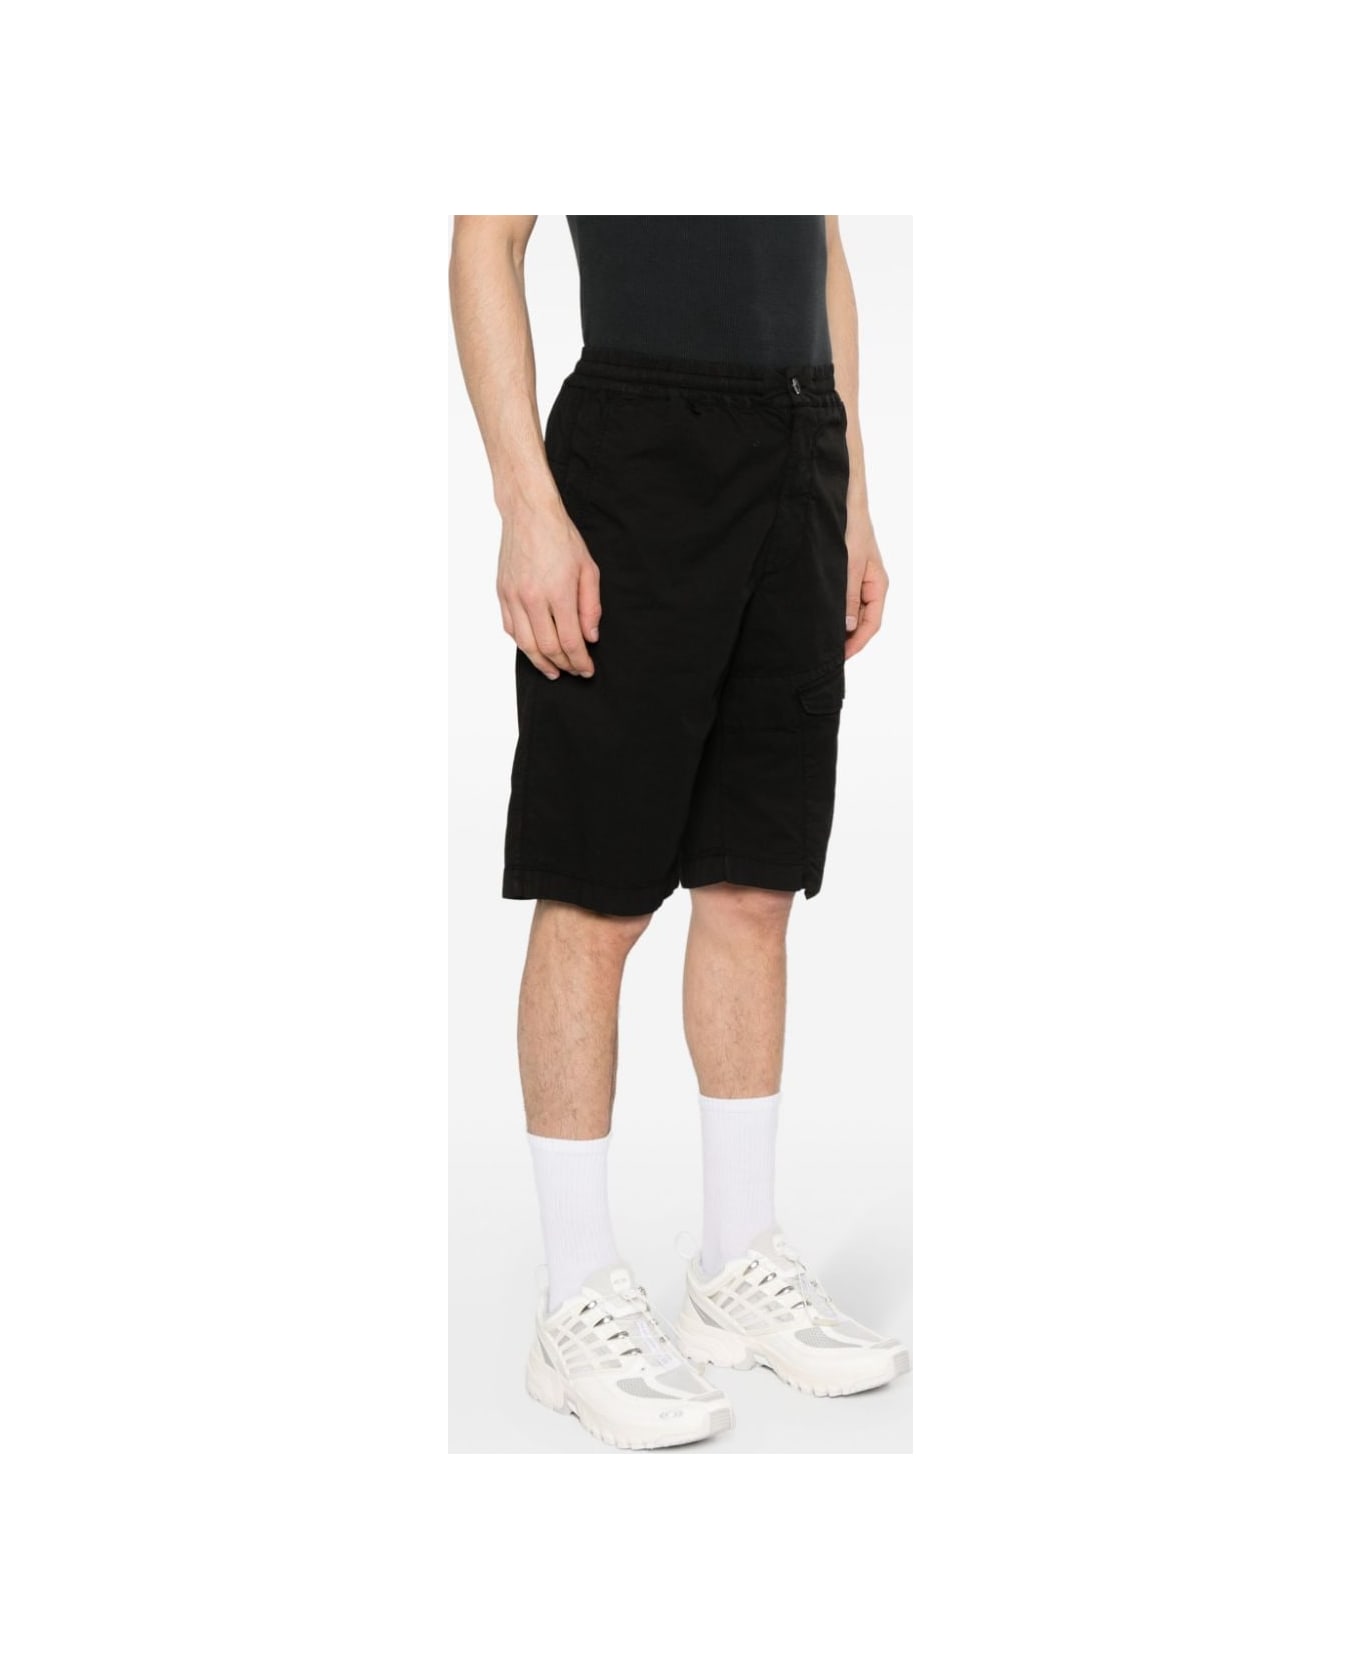 C.P. Company Shorts - Black ショートパンツ